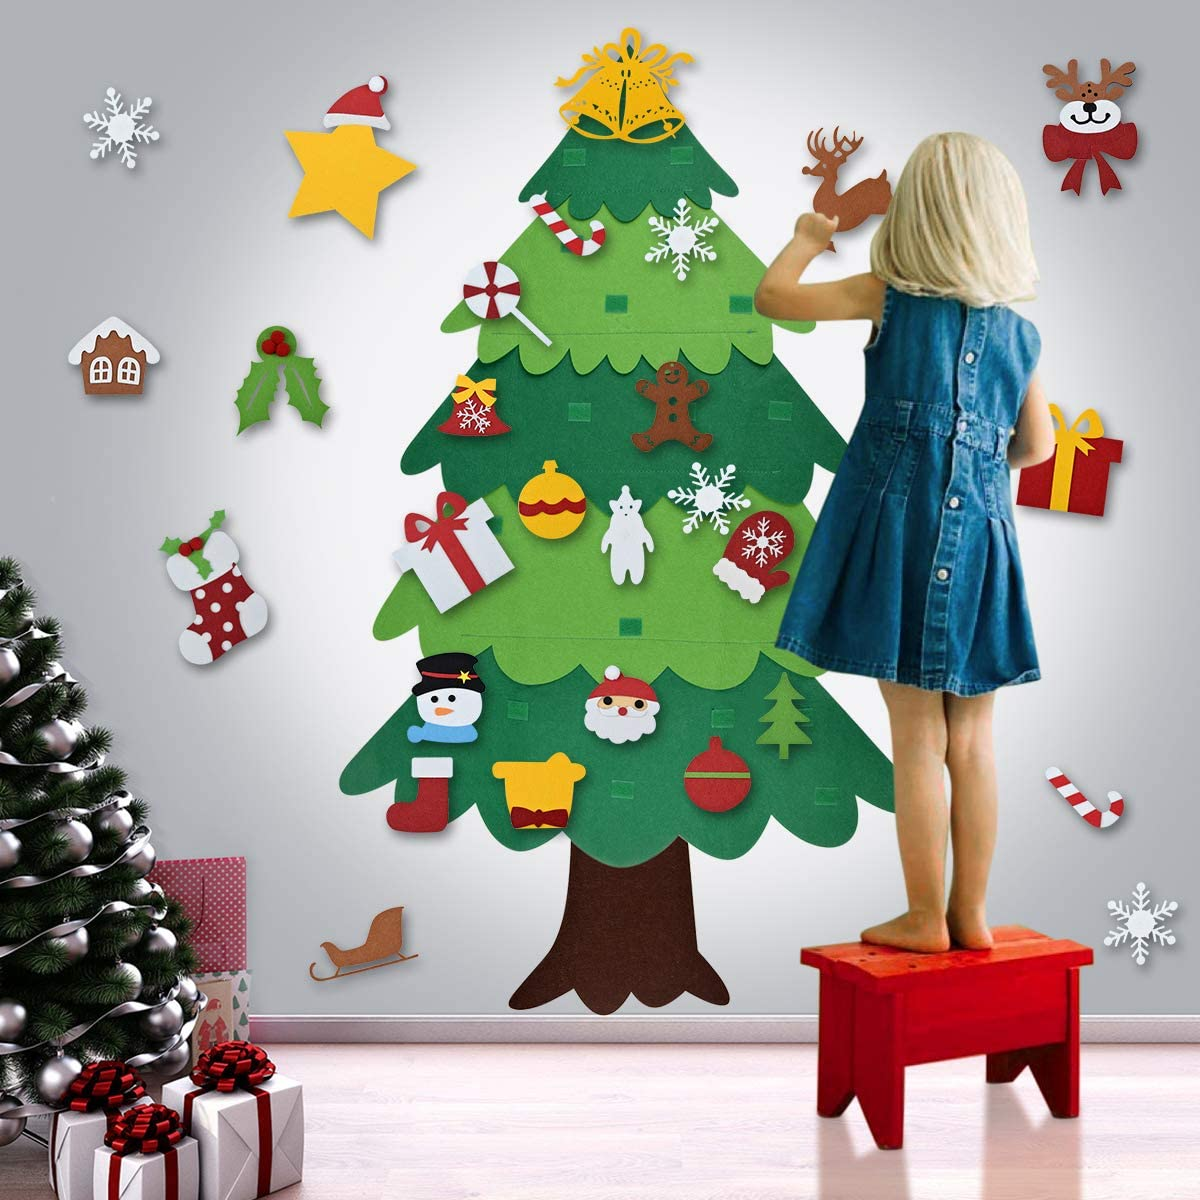 DIY Felt Christmas Tree & Spare Ornaments Bundle-Send LED String Light